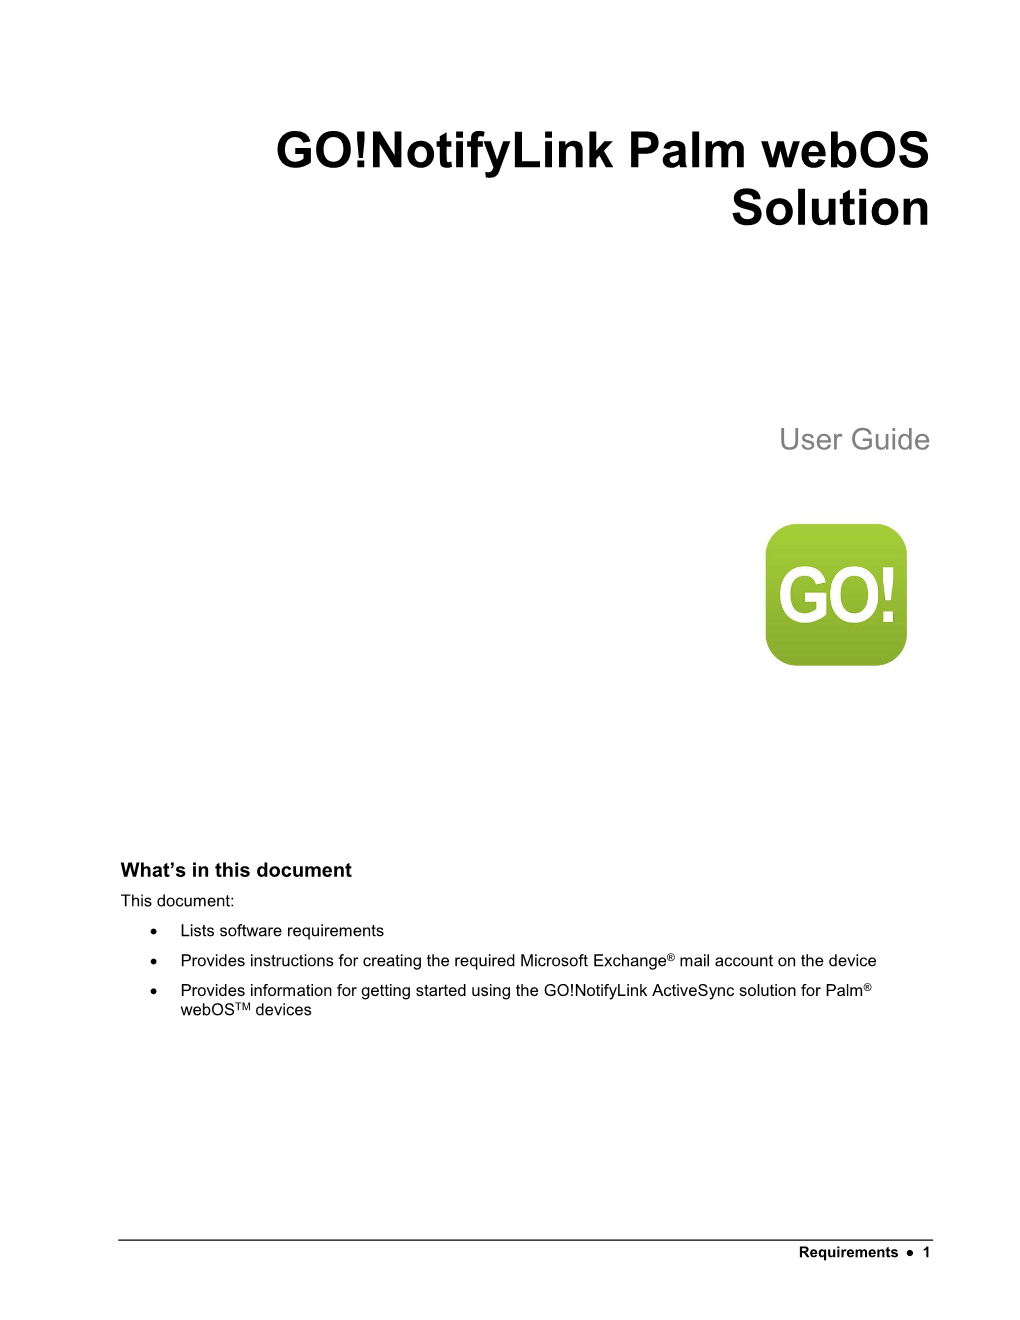 GO!Notifylink Palm Webos Solution